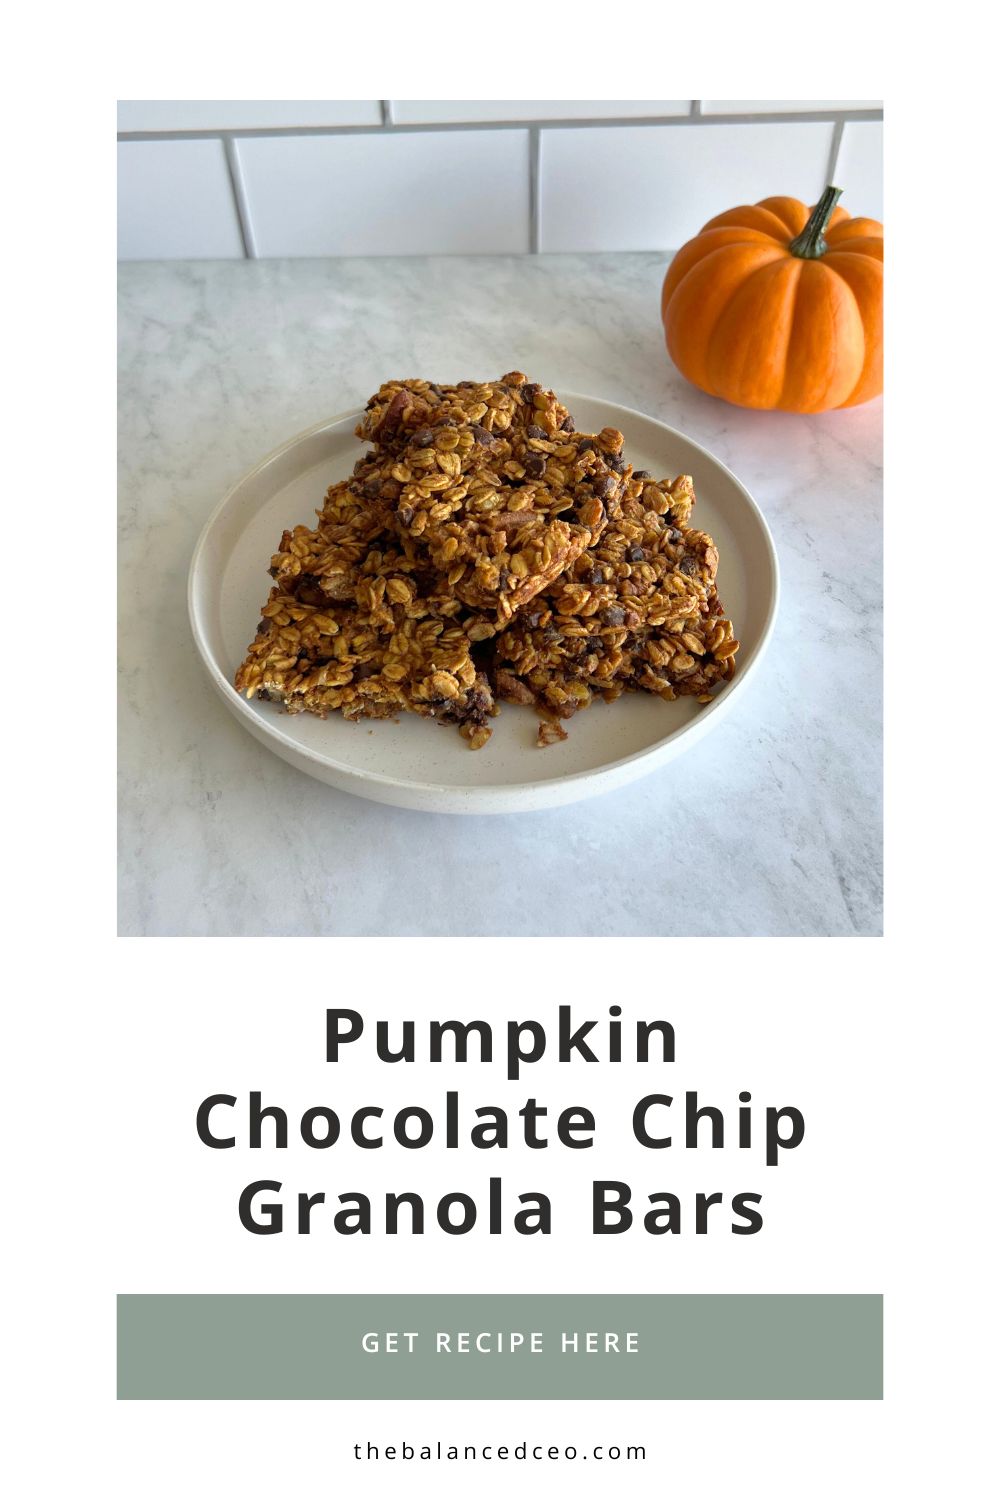 Pumpkin Chocolate Chip Granola Bars